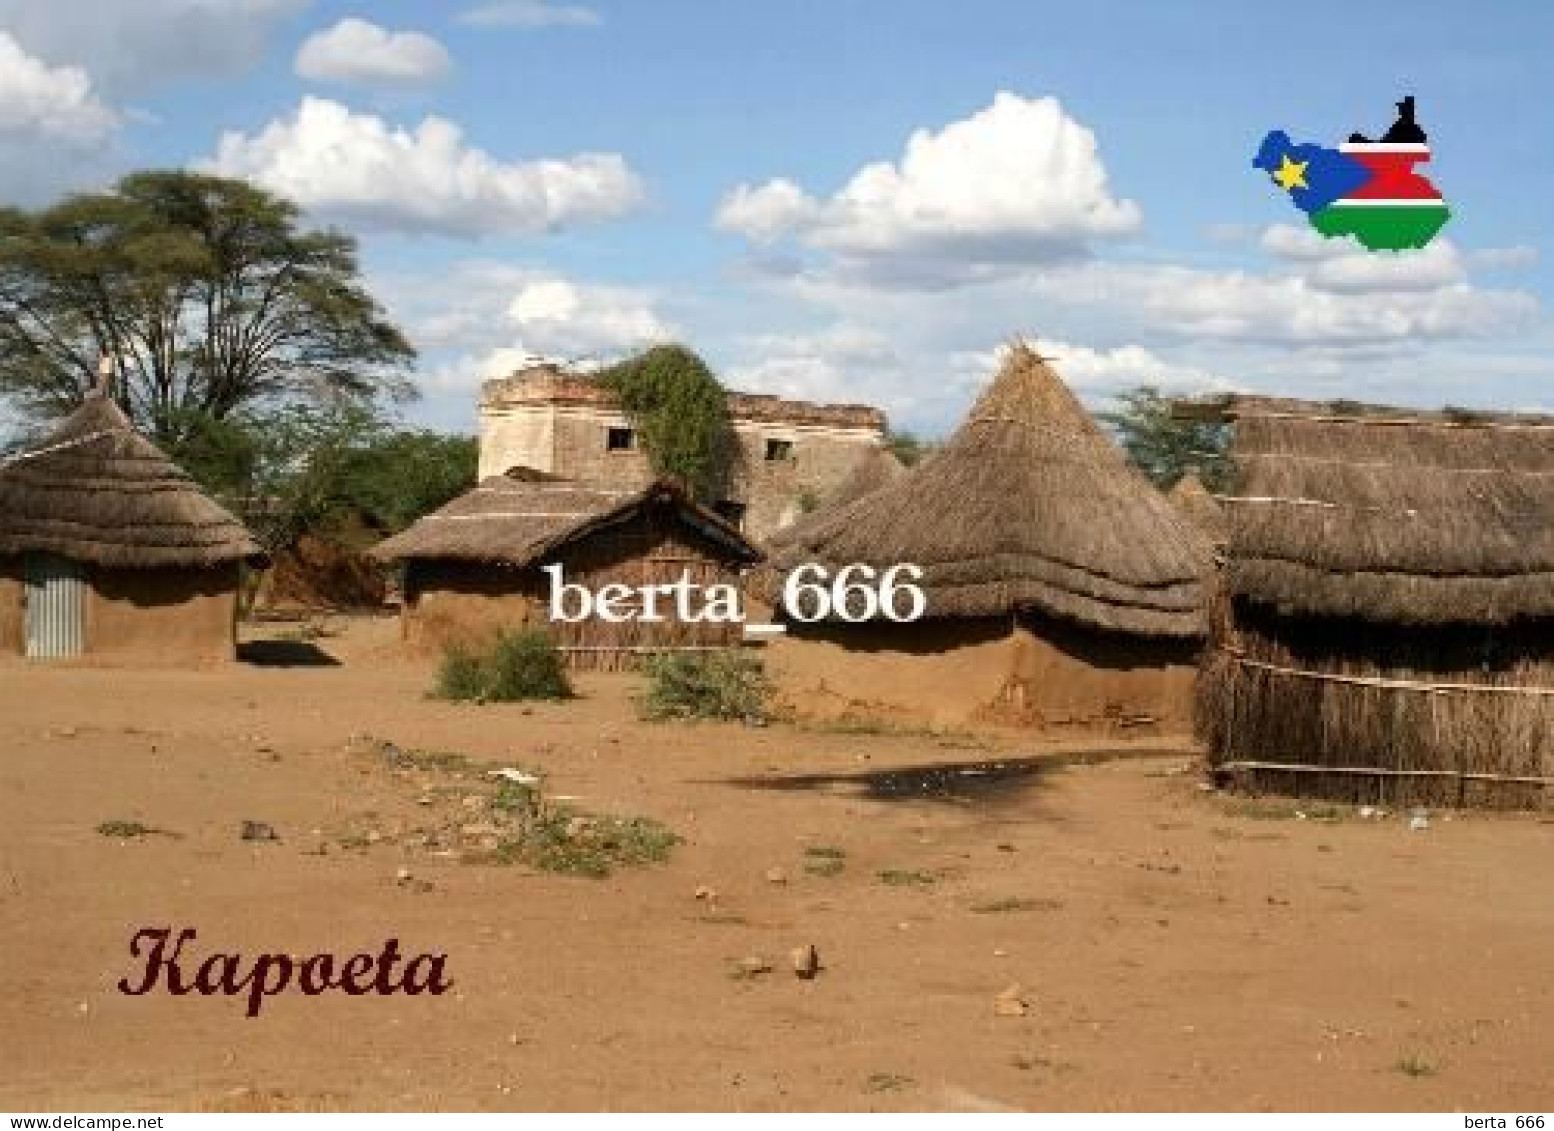 South Sudan Kapoeta Huts New Postcard - Sudan